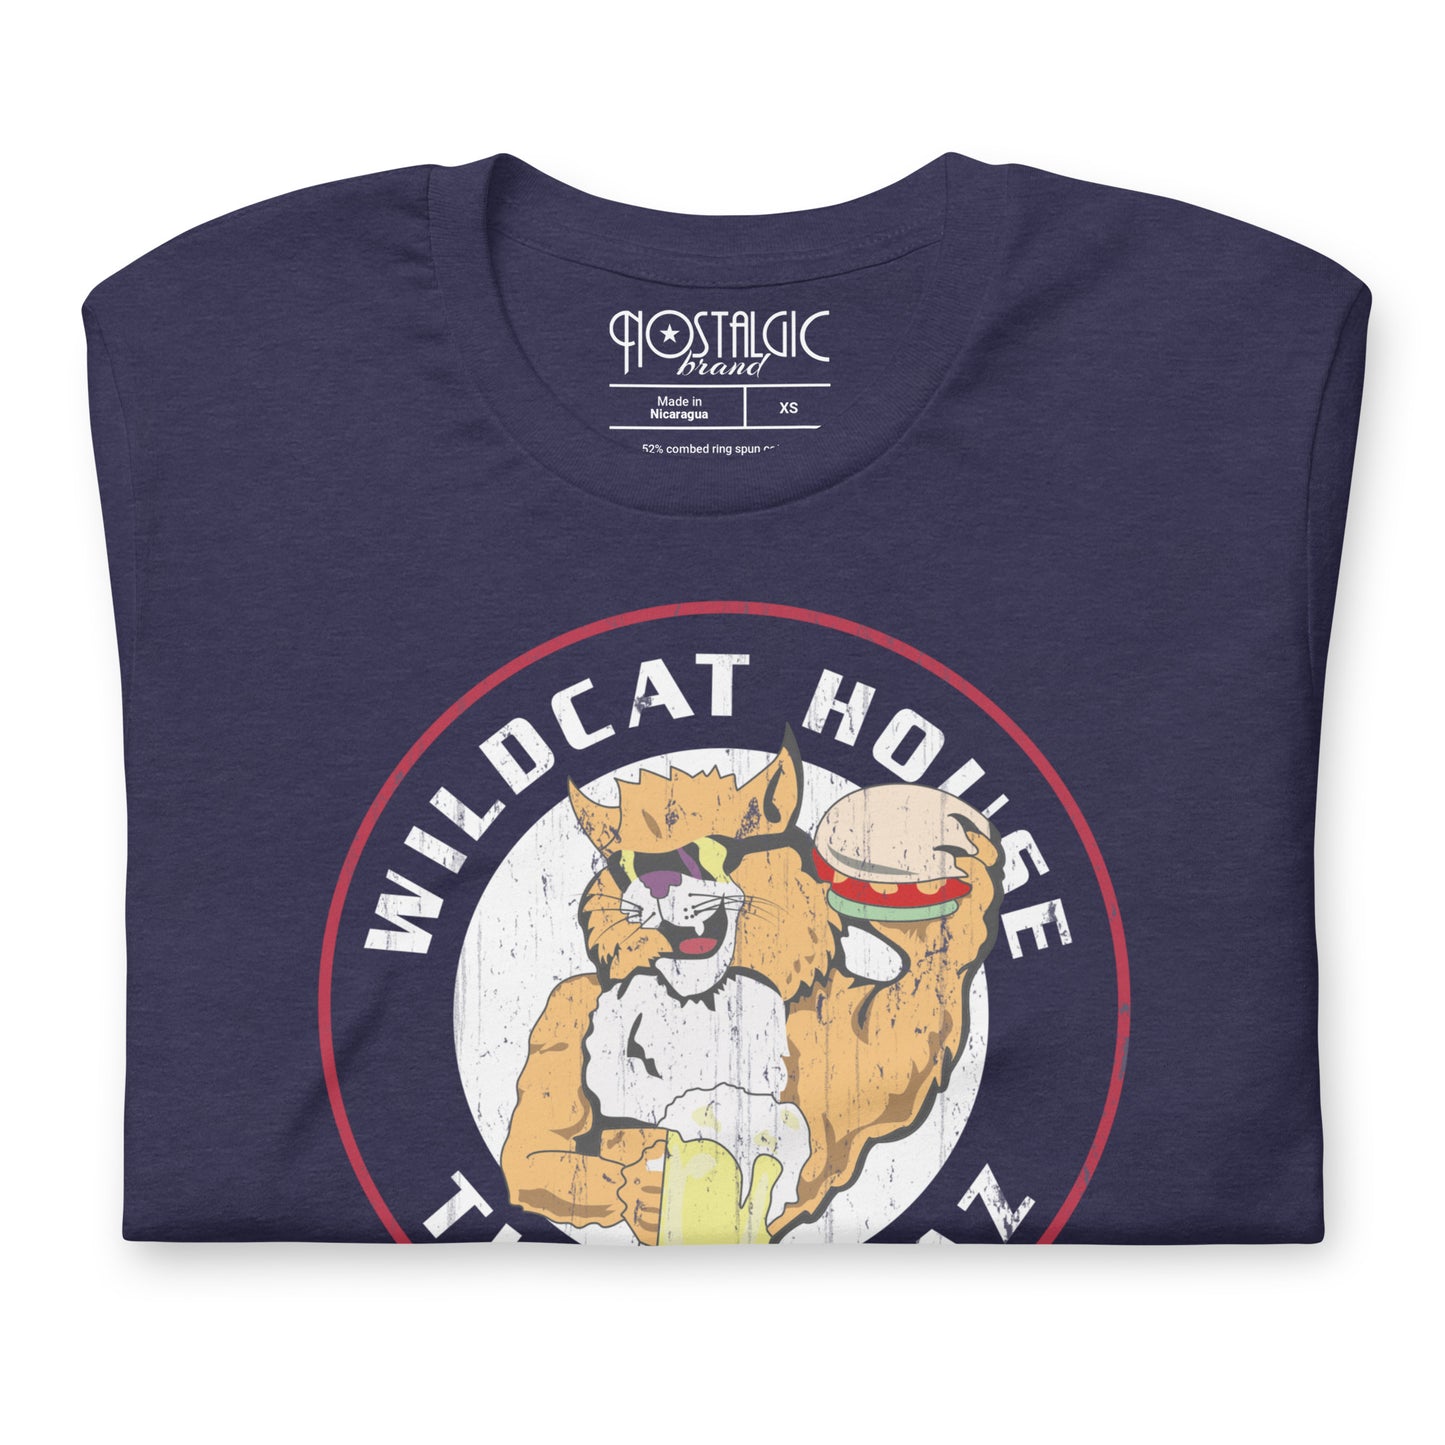 The Wildcat House